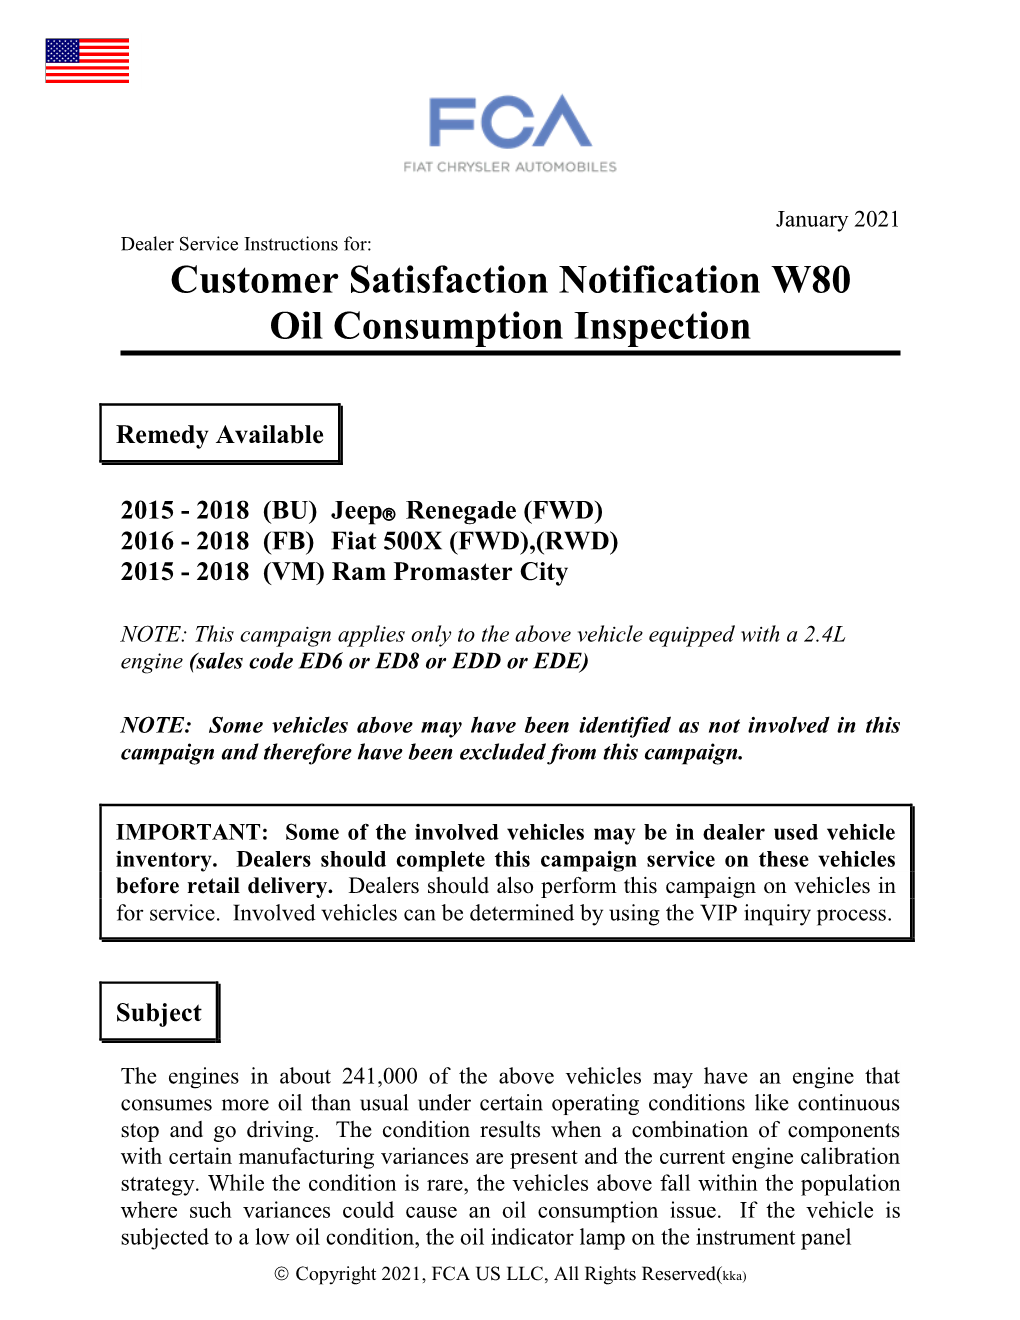 Customer Satisfaction Notification W80 Oil Consumption Inspection